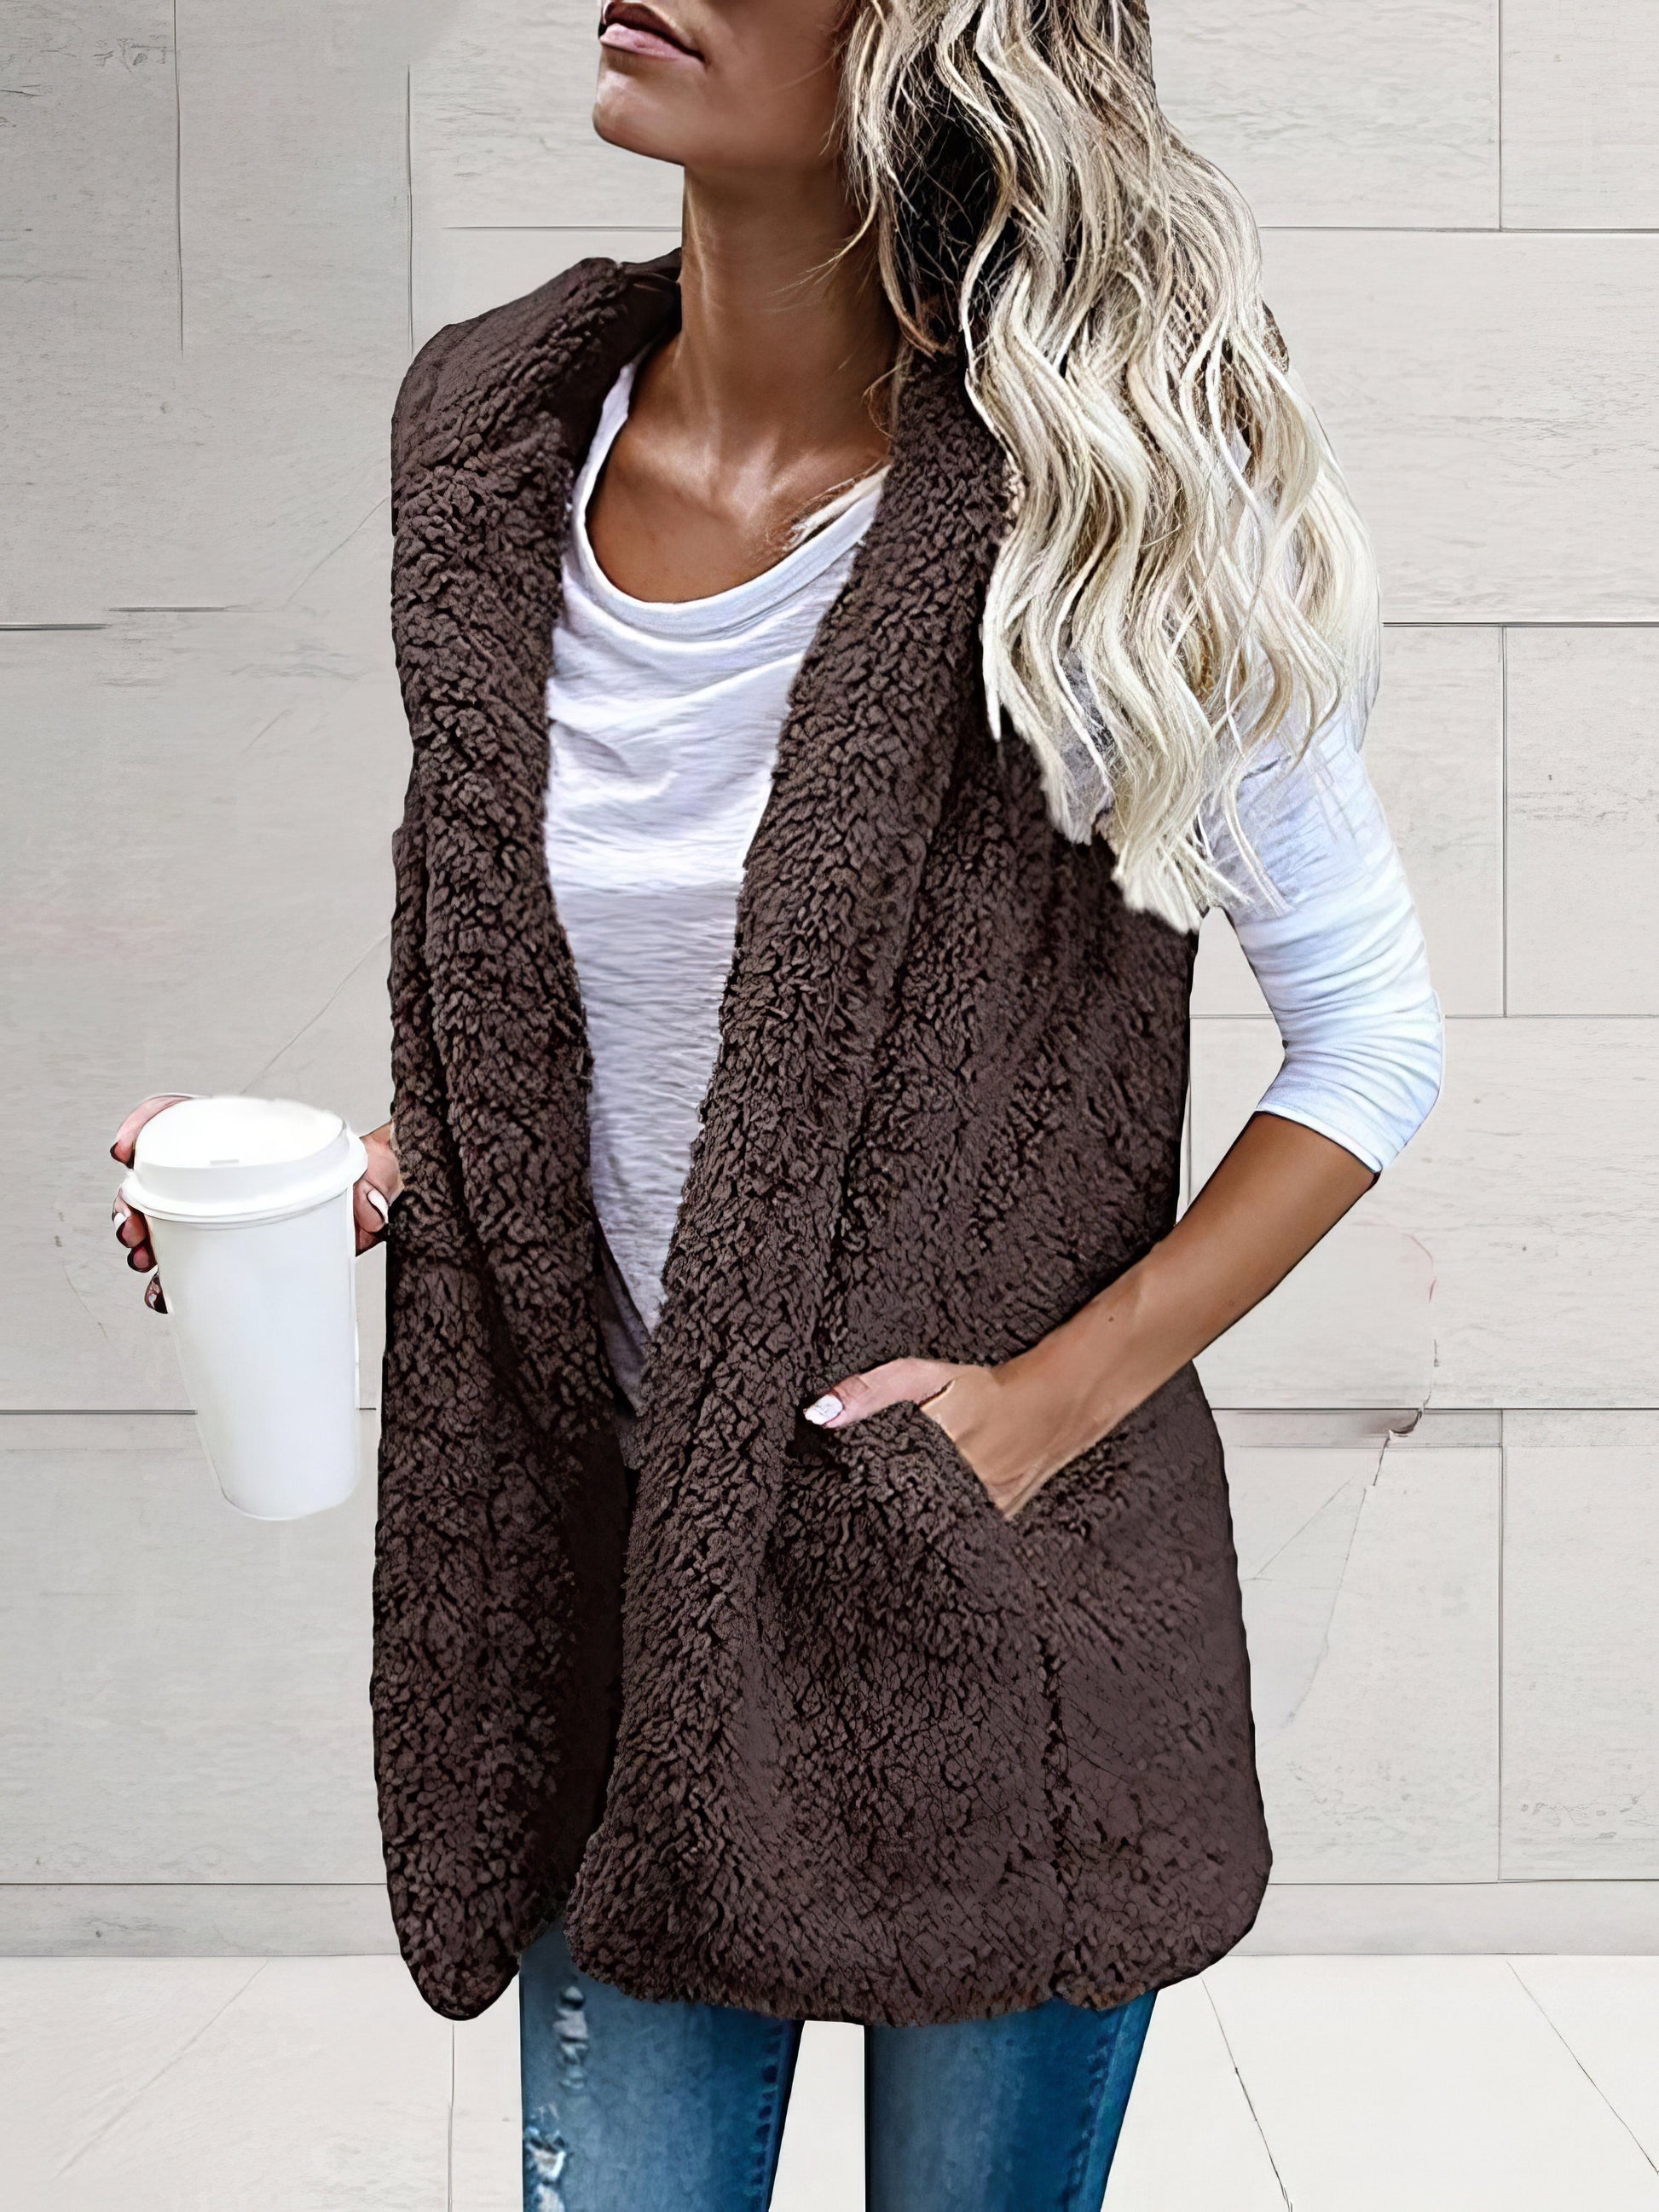 Coats - Solid Sleeveless Hooded Pocket Fur Vest - MsDressly